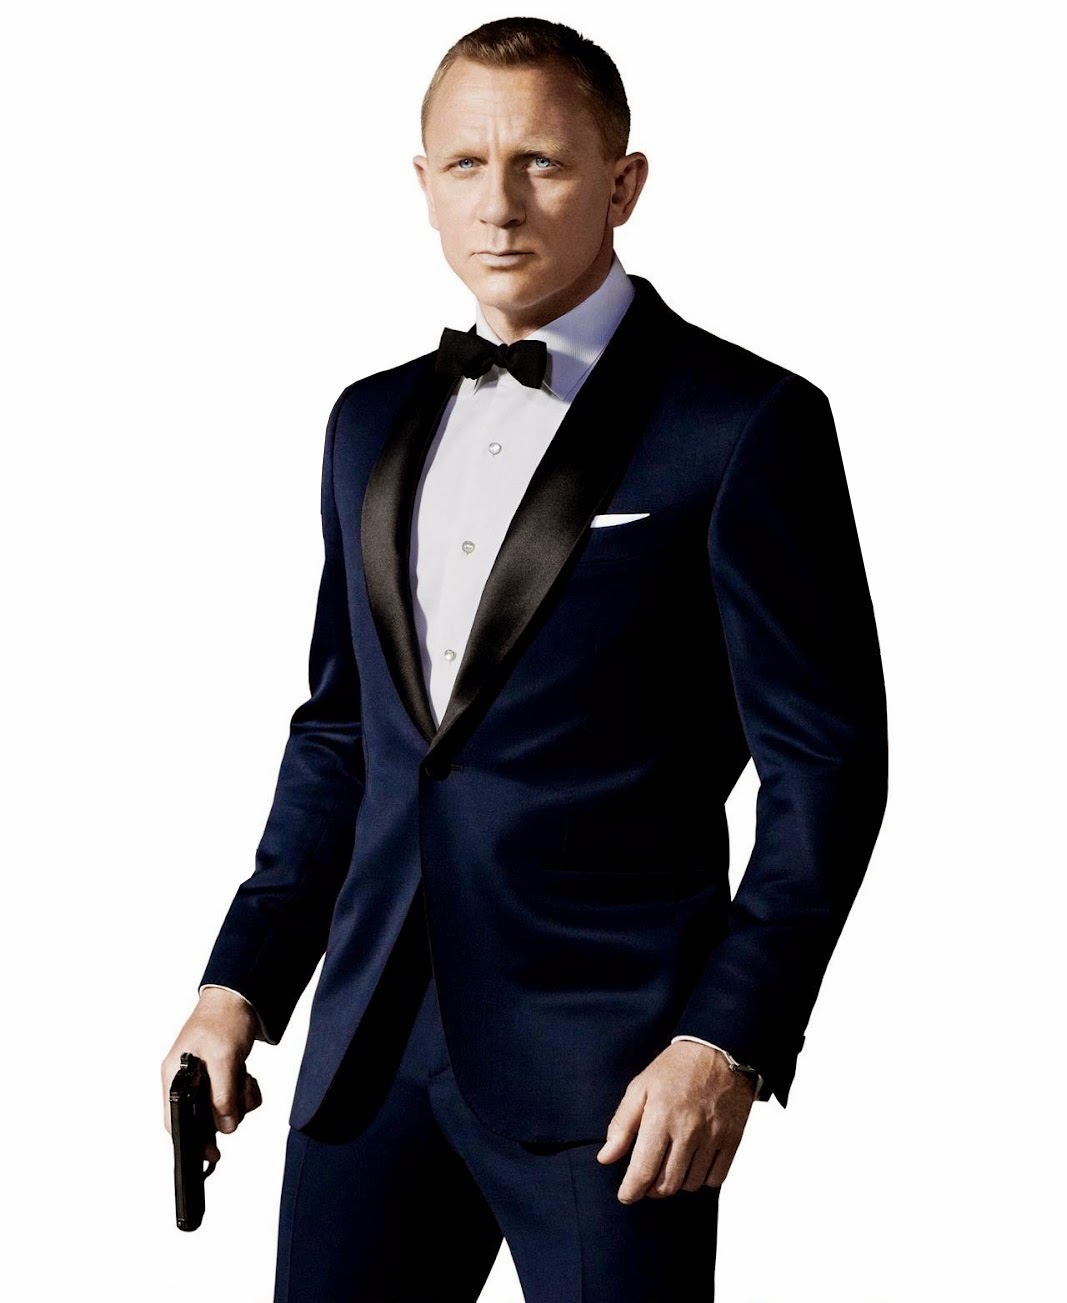 Esmoquin Azul al estilo 007 Elegantísimo